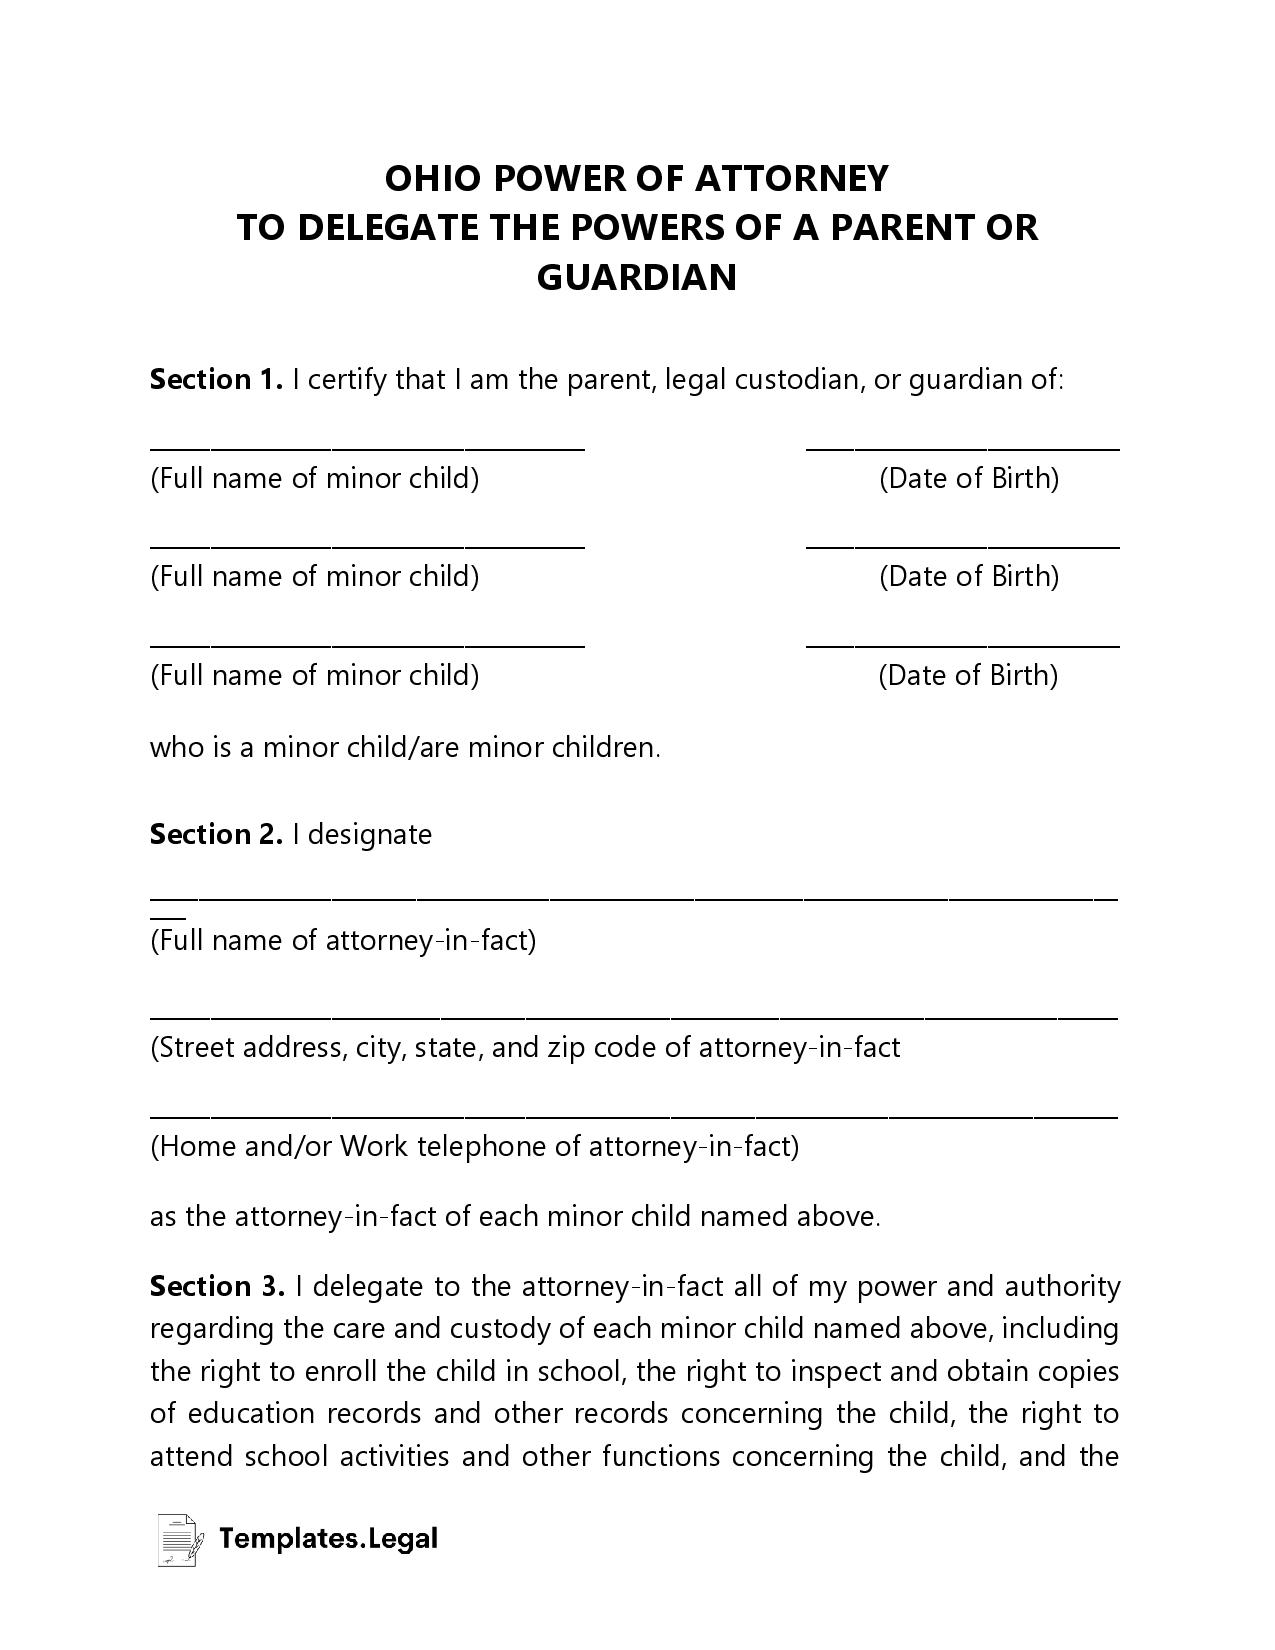 Ohio Minor (Child) Power of Attorney - Templates.Legal